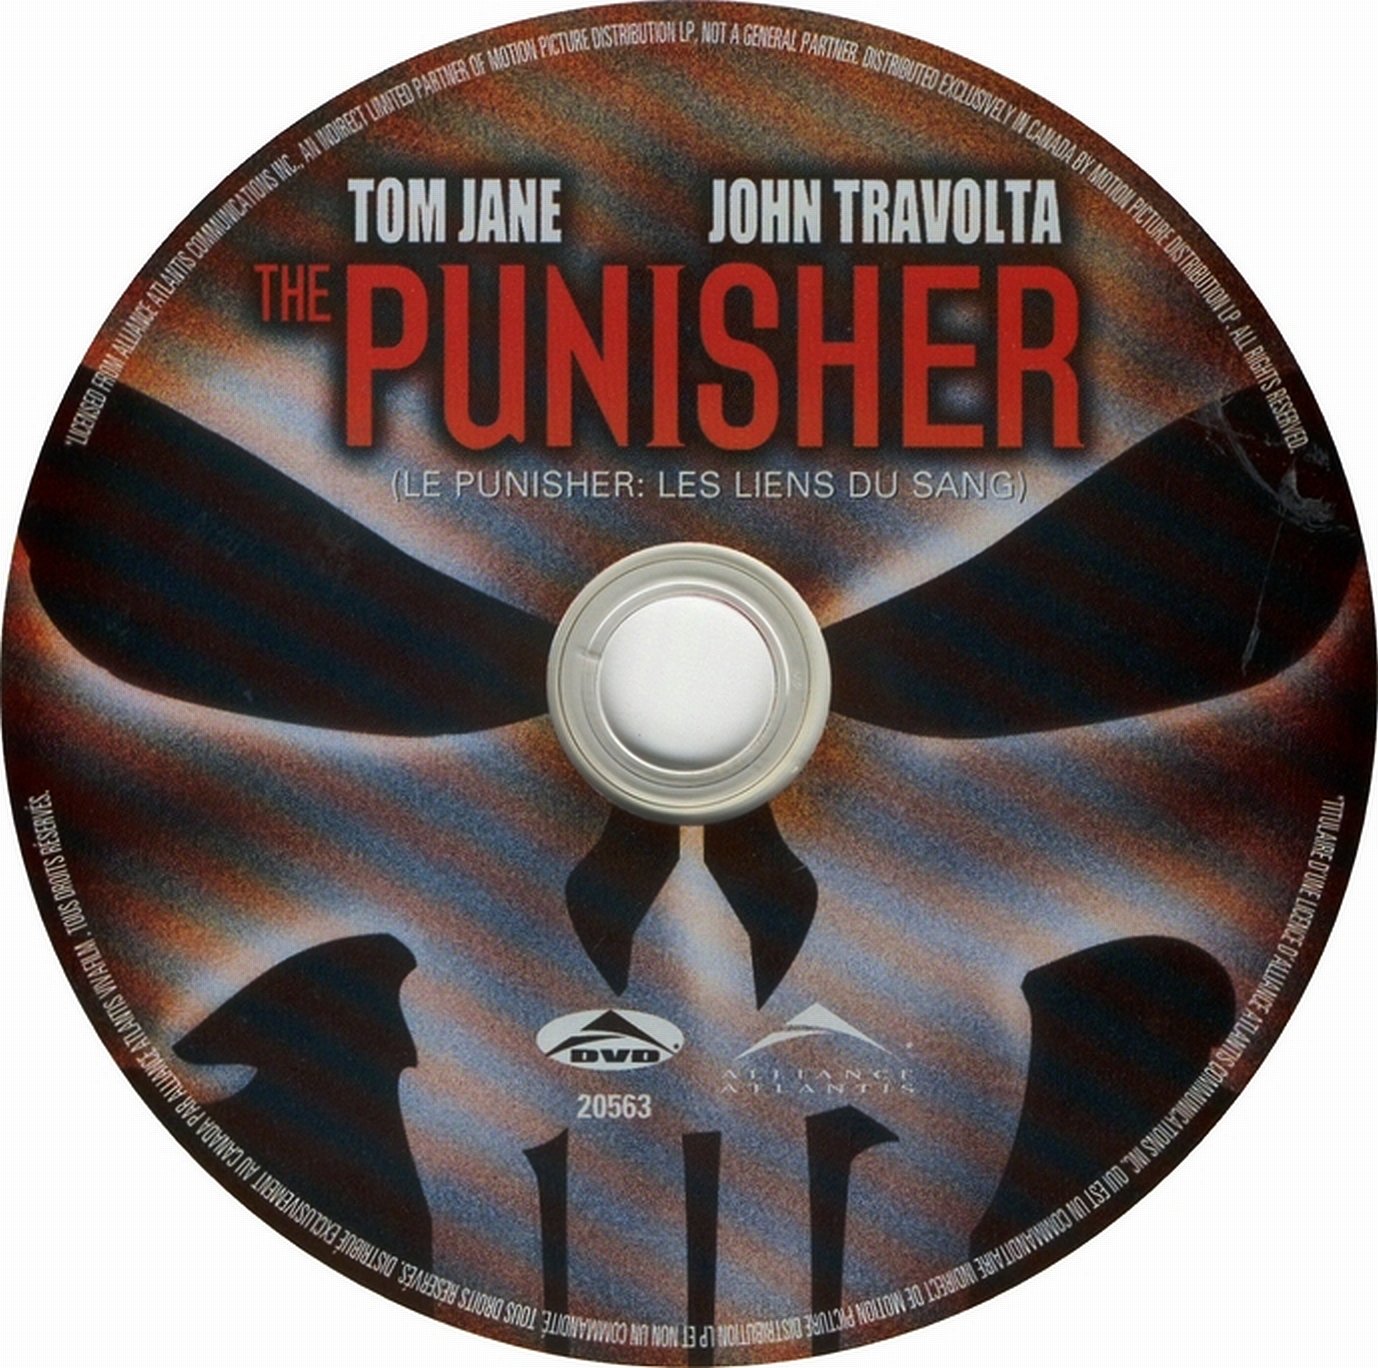 The punisher v2